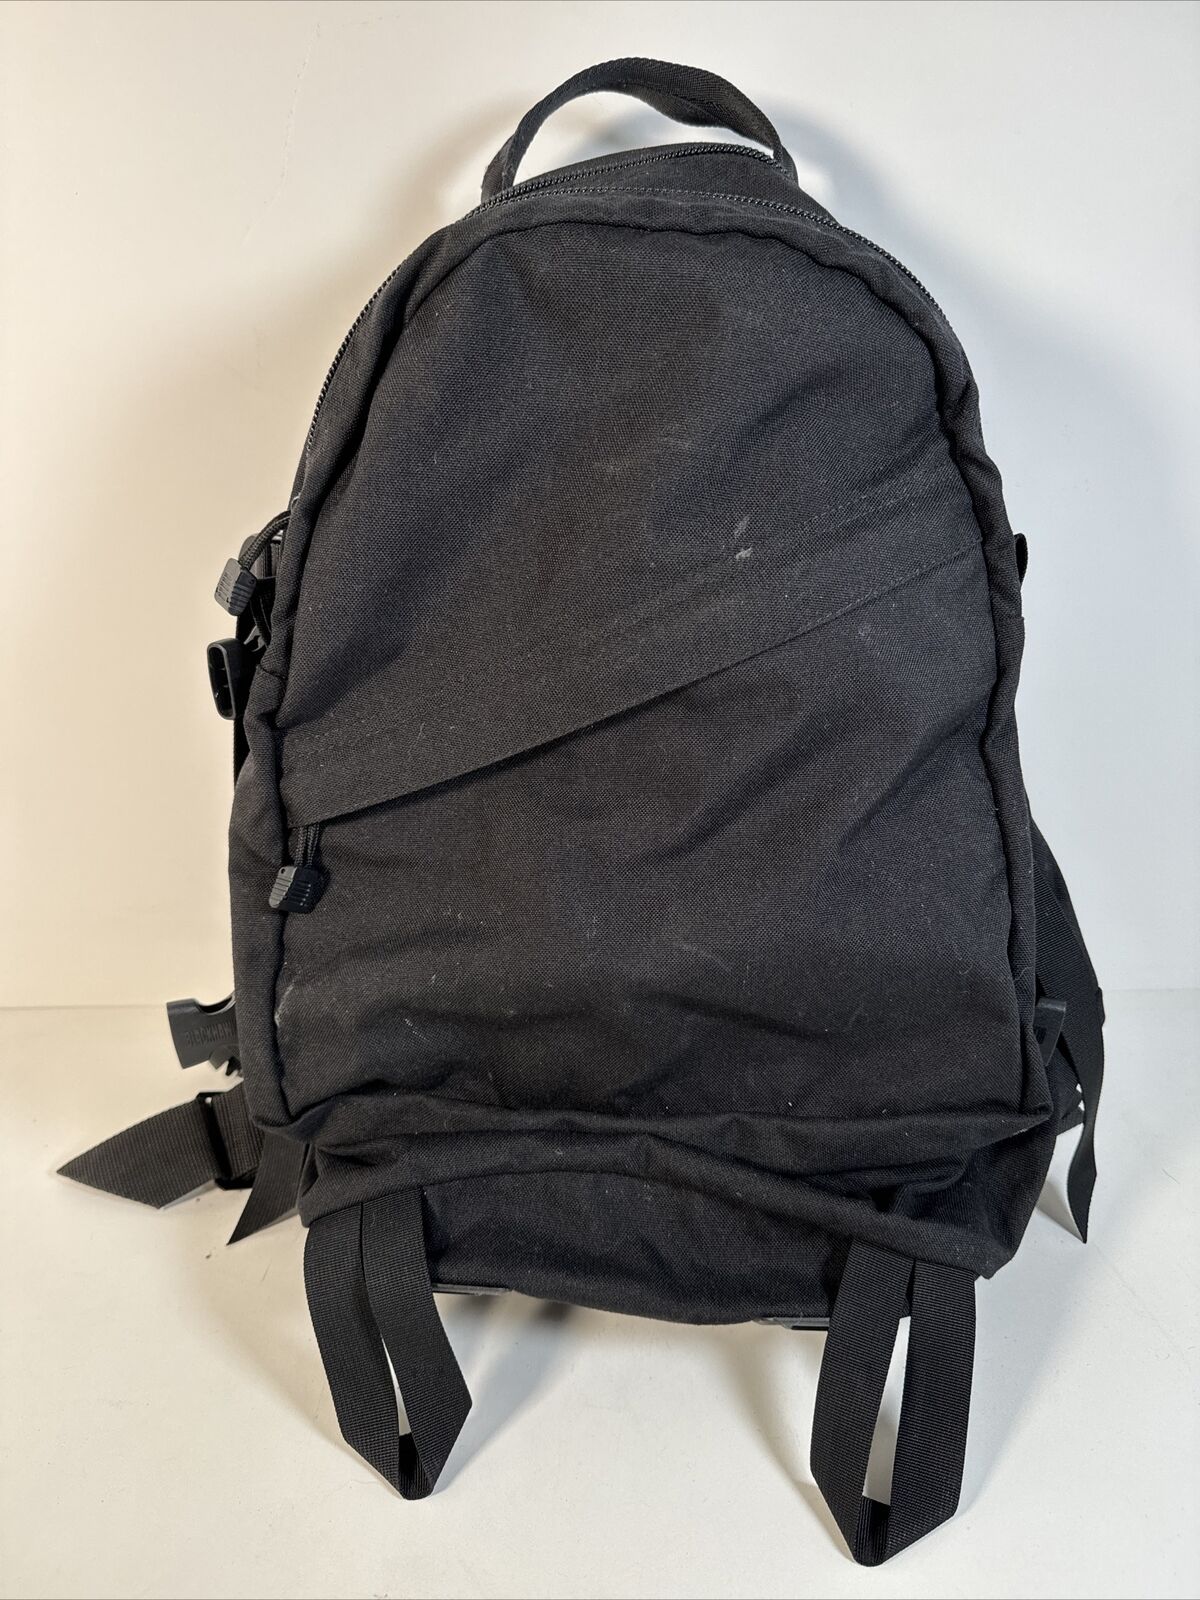 BLACKHAWK Black X-1 R.A.P.T.O.R. Ranger Assault Tactical Ruck Pack Backpack Bag